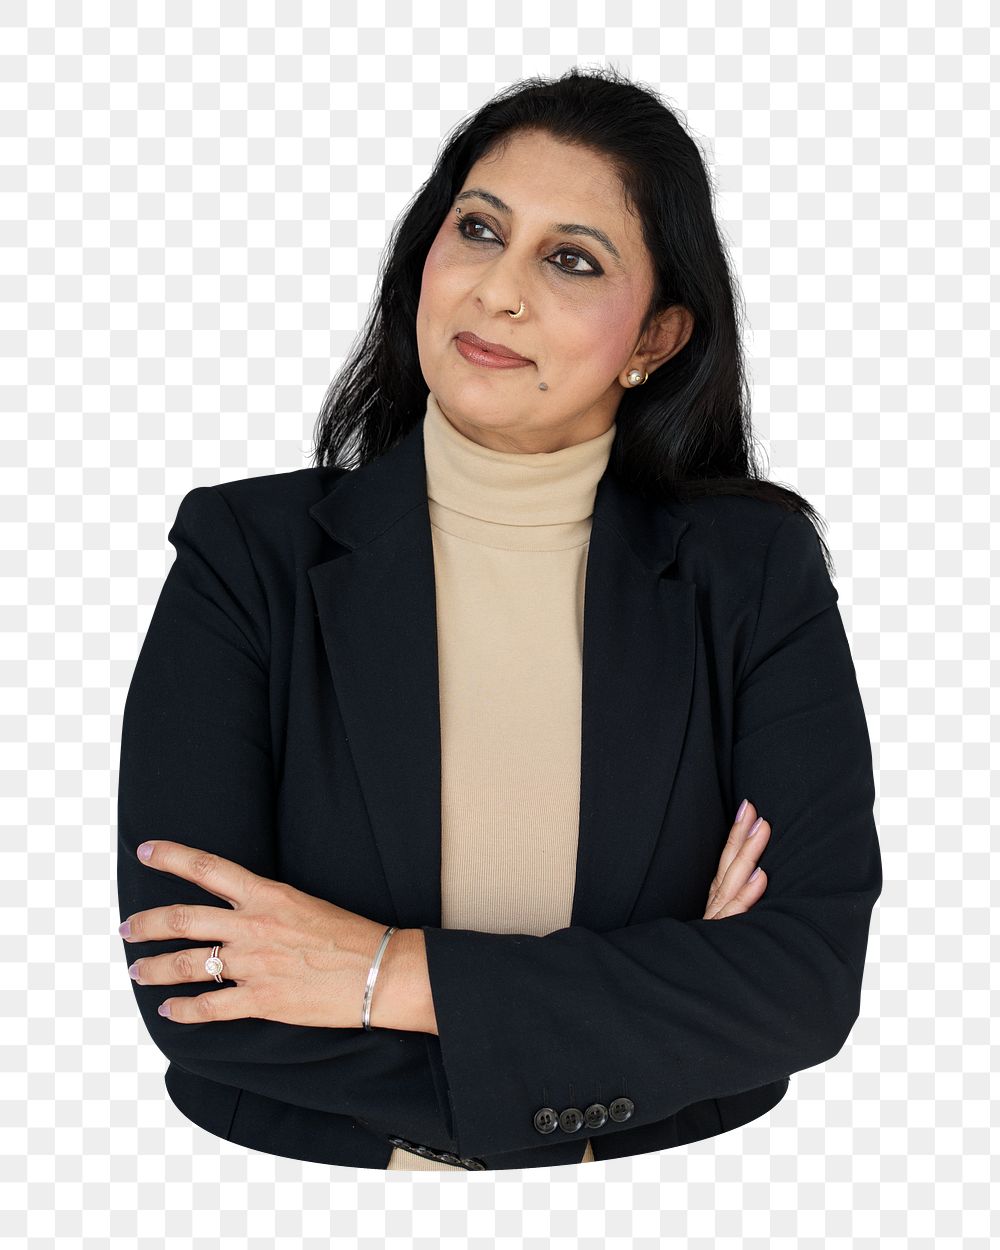 Indian businesswoman png element, transparent background